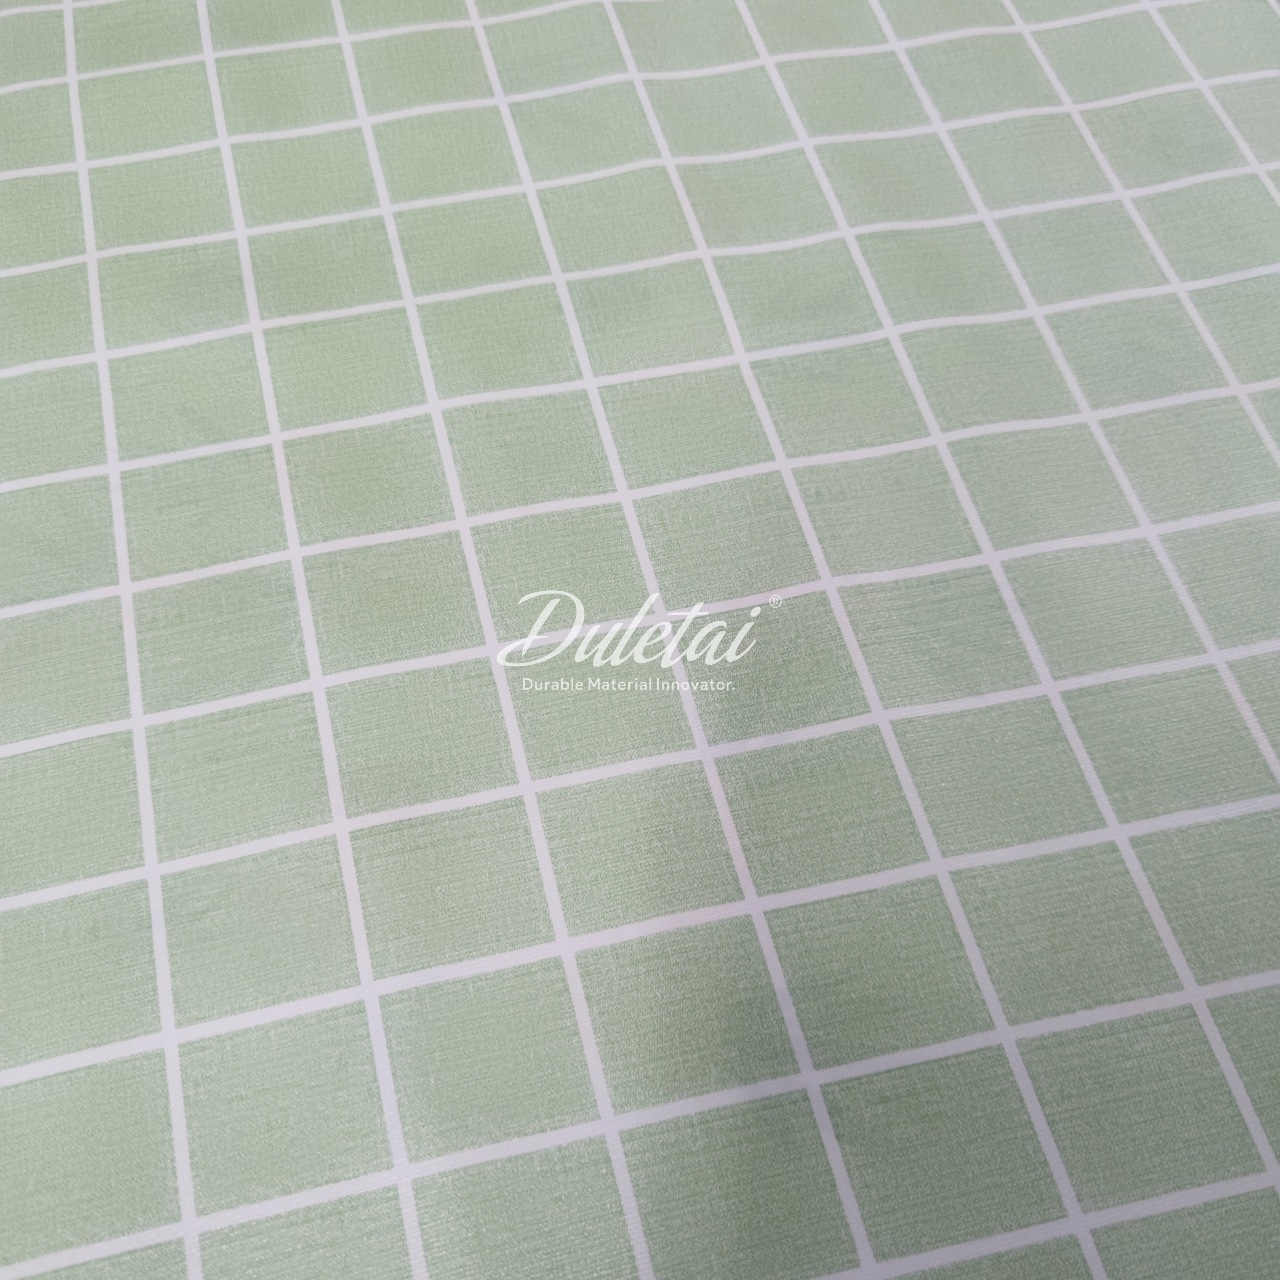 printed vinyl tablecloth